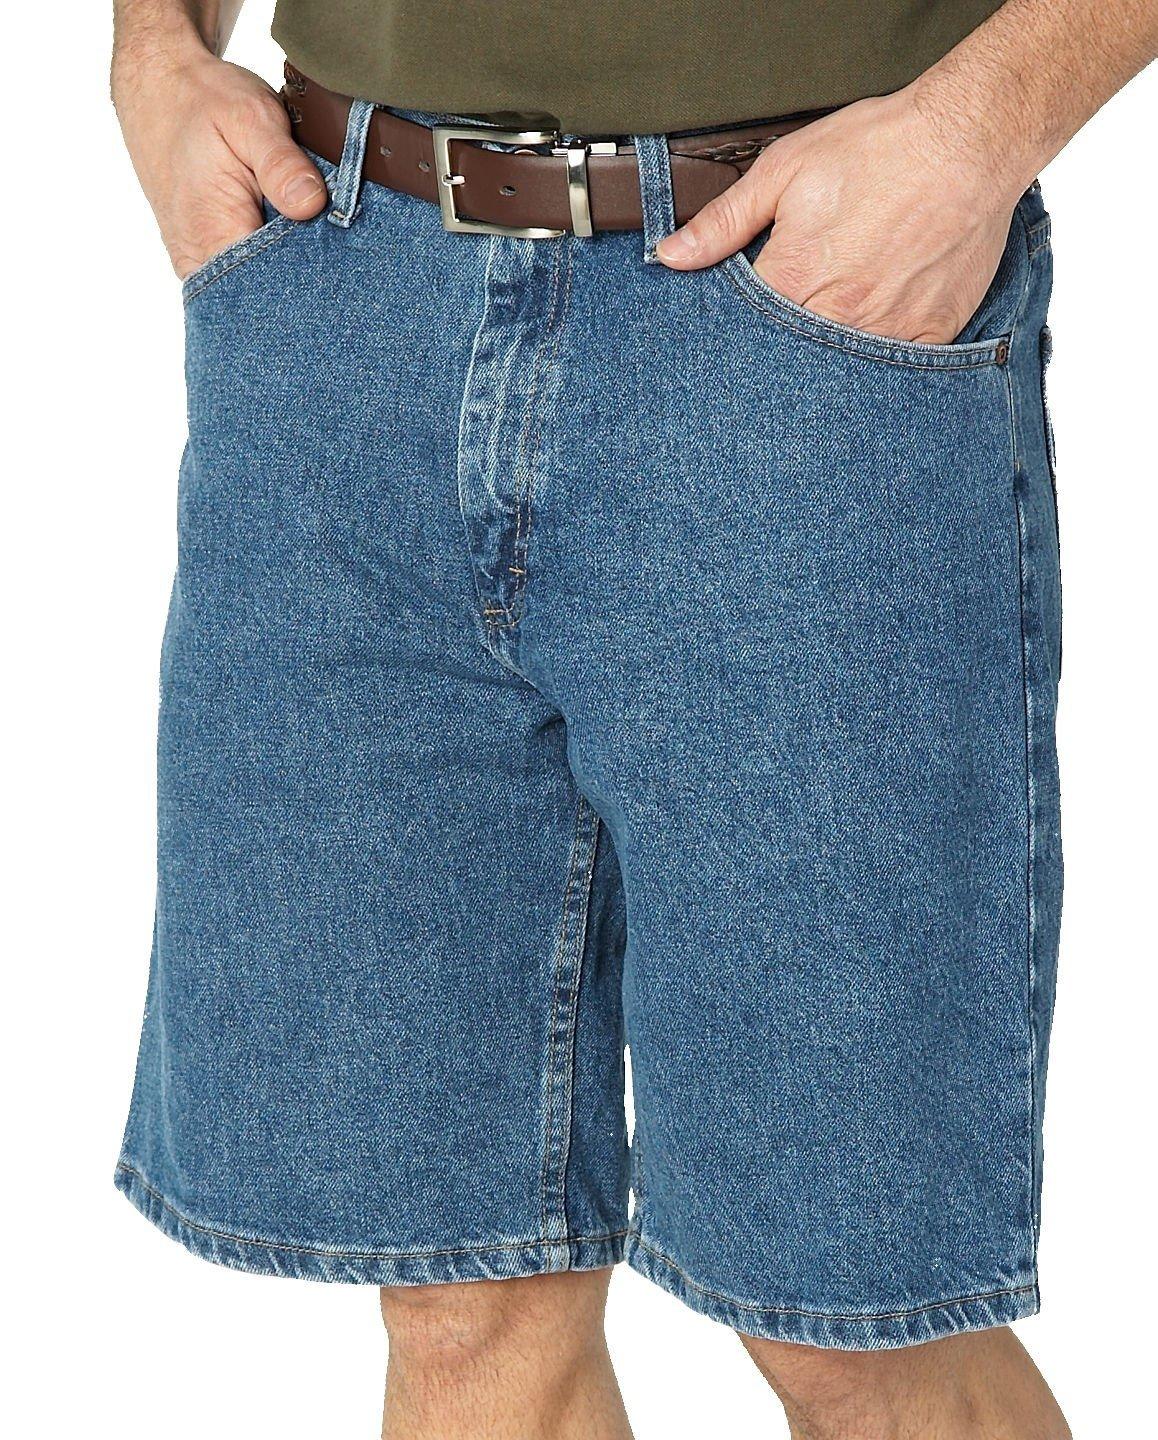 lee jean shorts mens